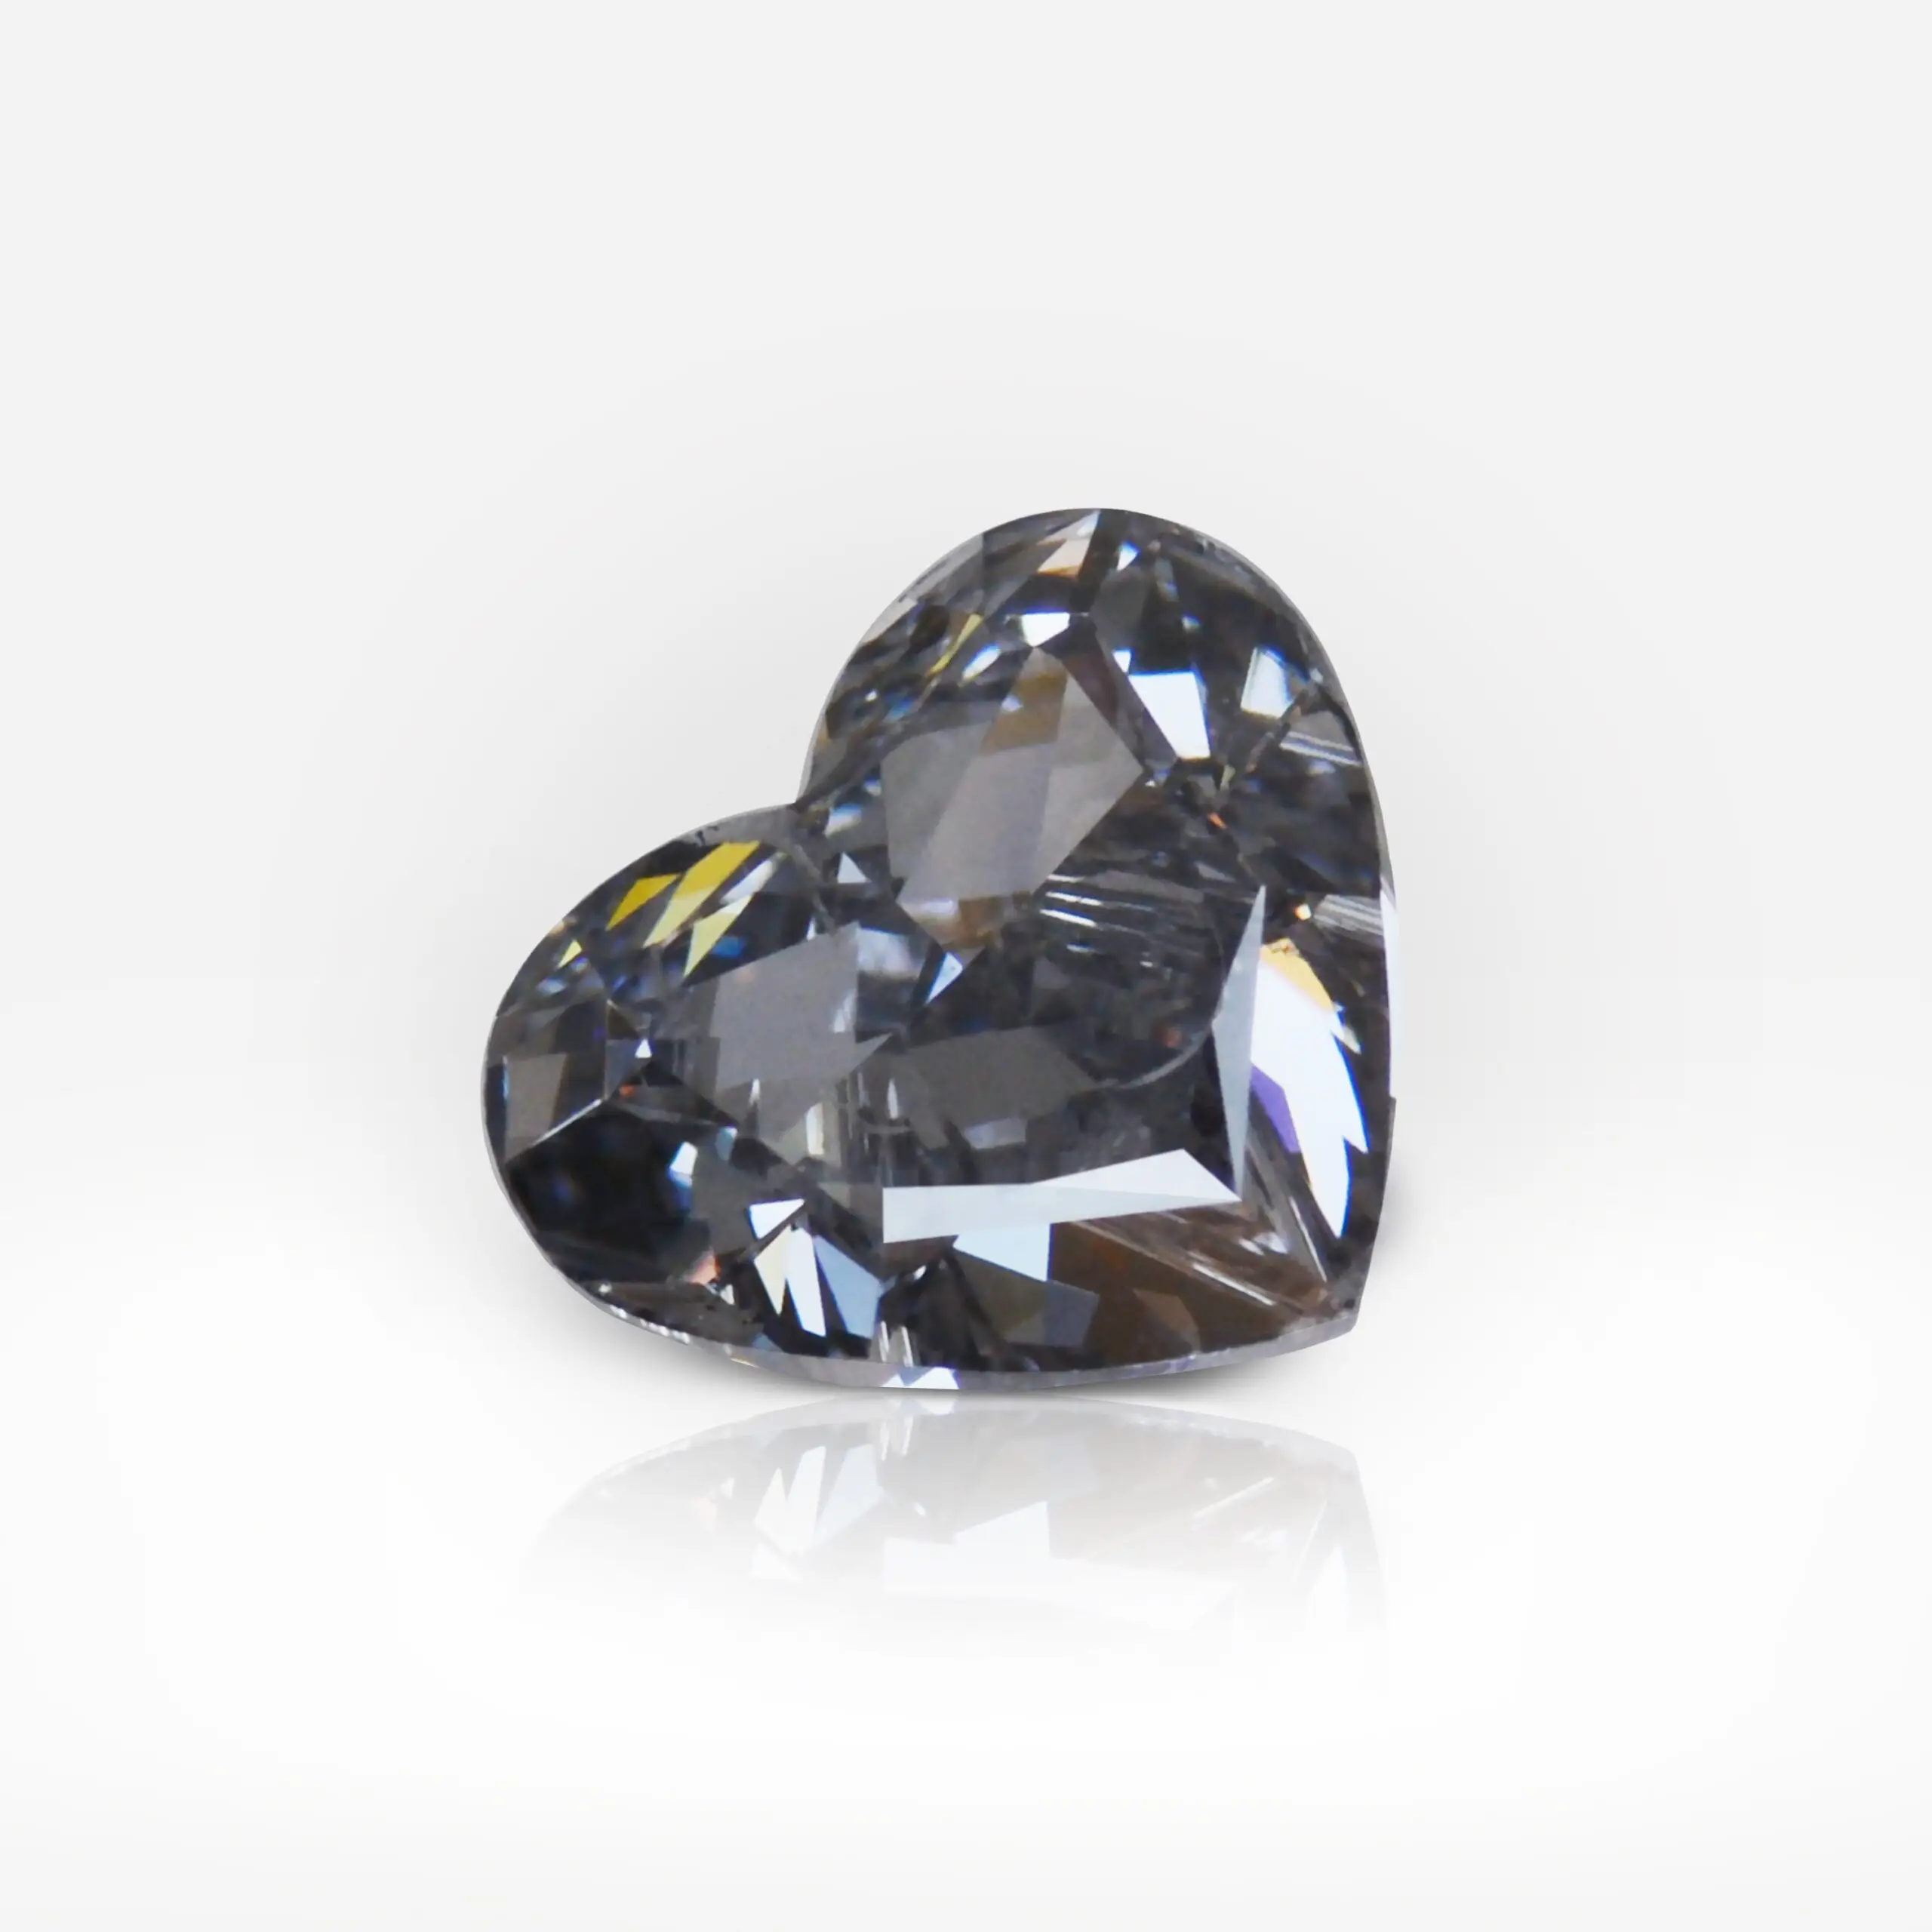 0.81 carat Fancy Violet Gray I1 Heart Shape Diamond GIA - picture 1